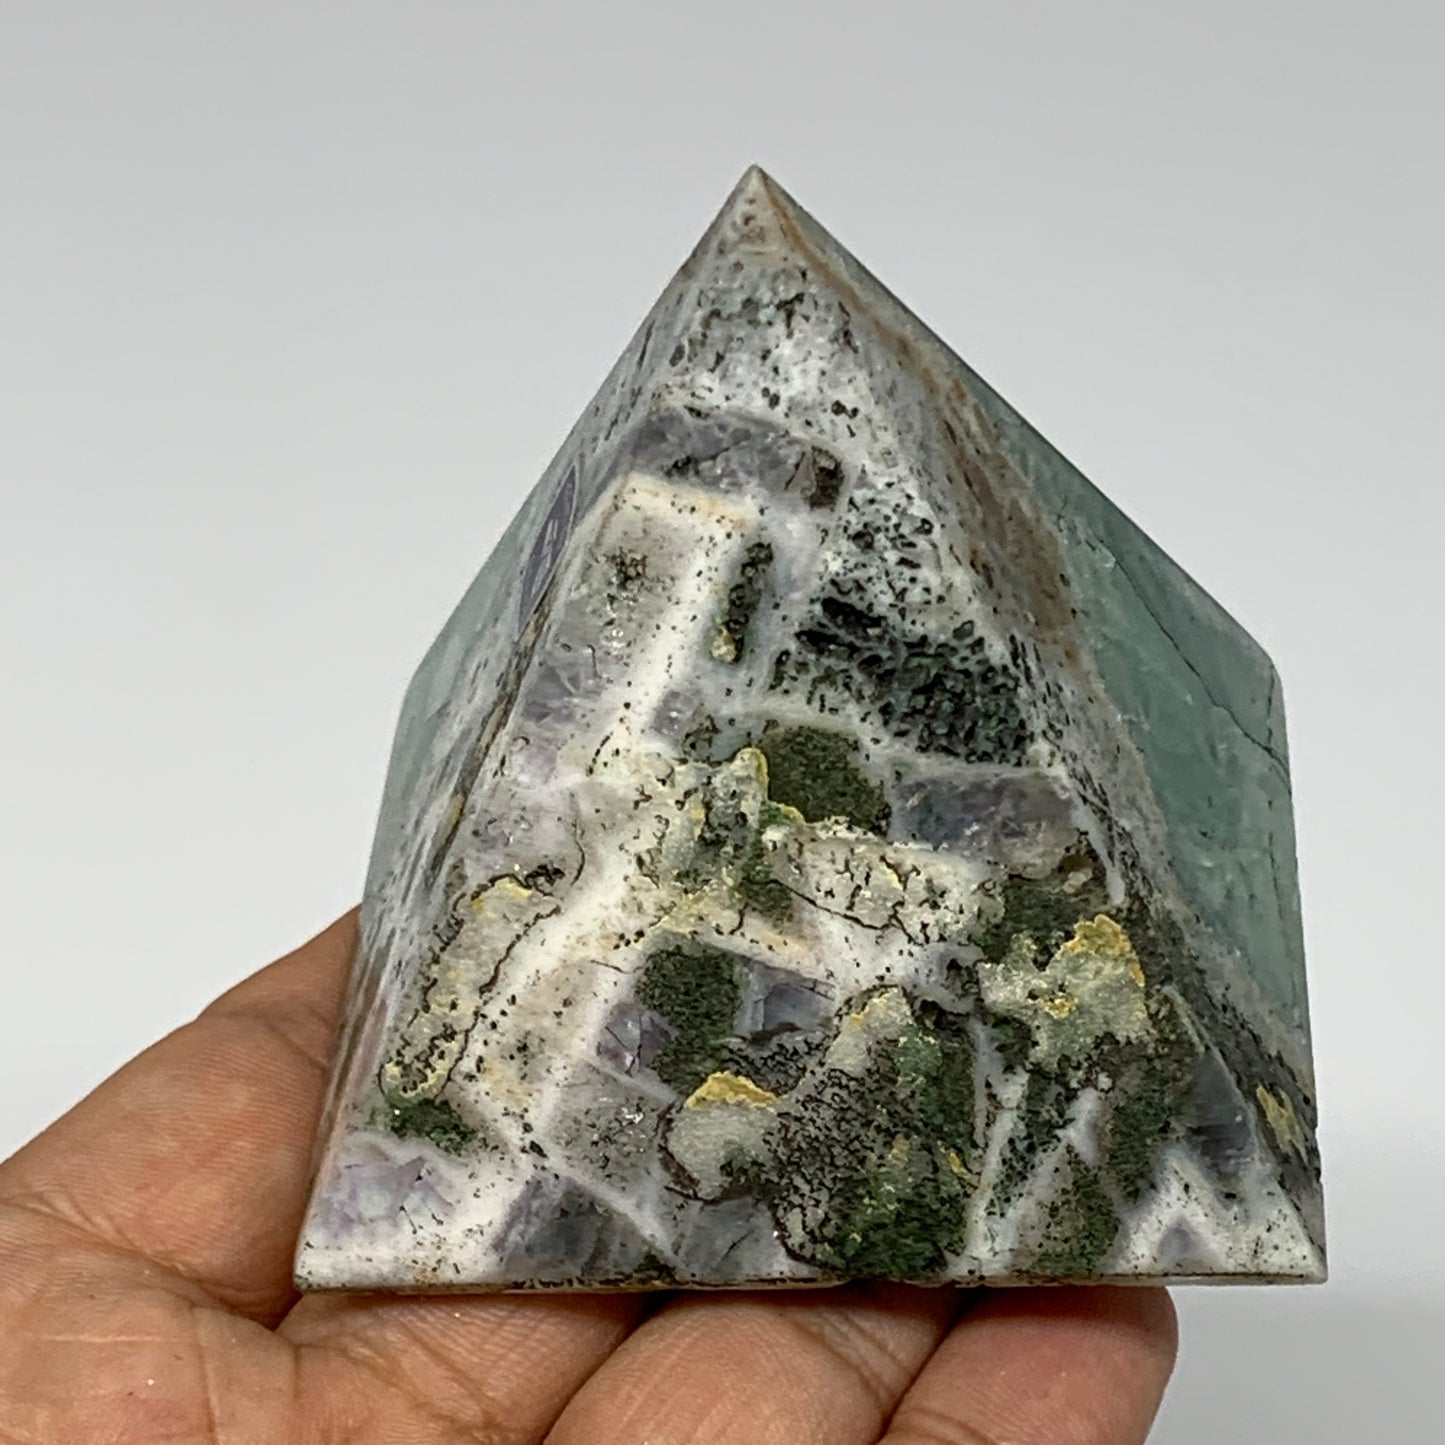 229.2g, 2.4"x2.4"x2.5" Natural Green Fluorite Pyramid Crystal Gemstone @Mexico,